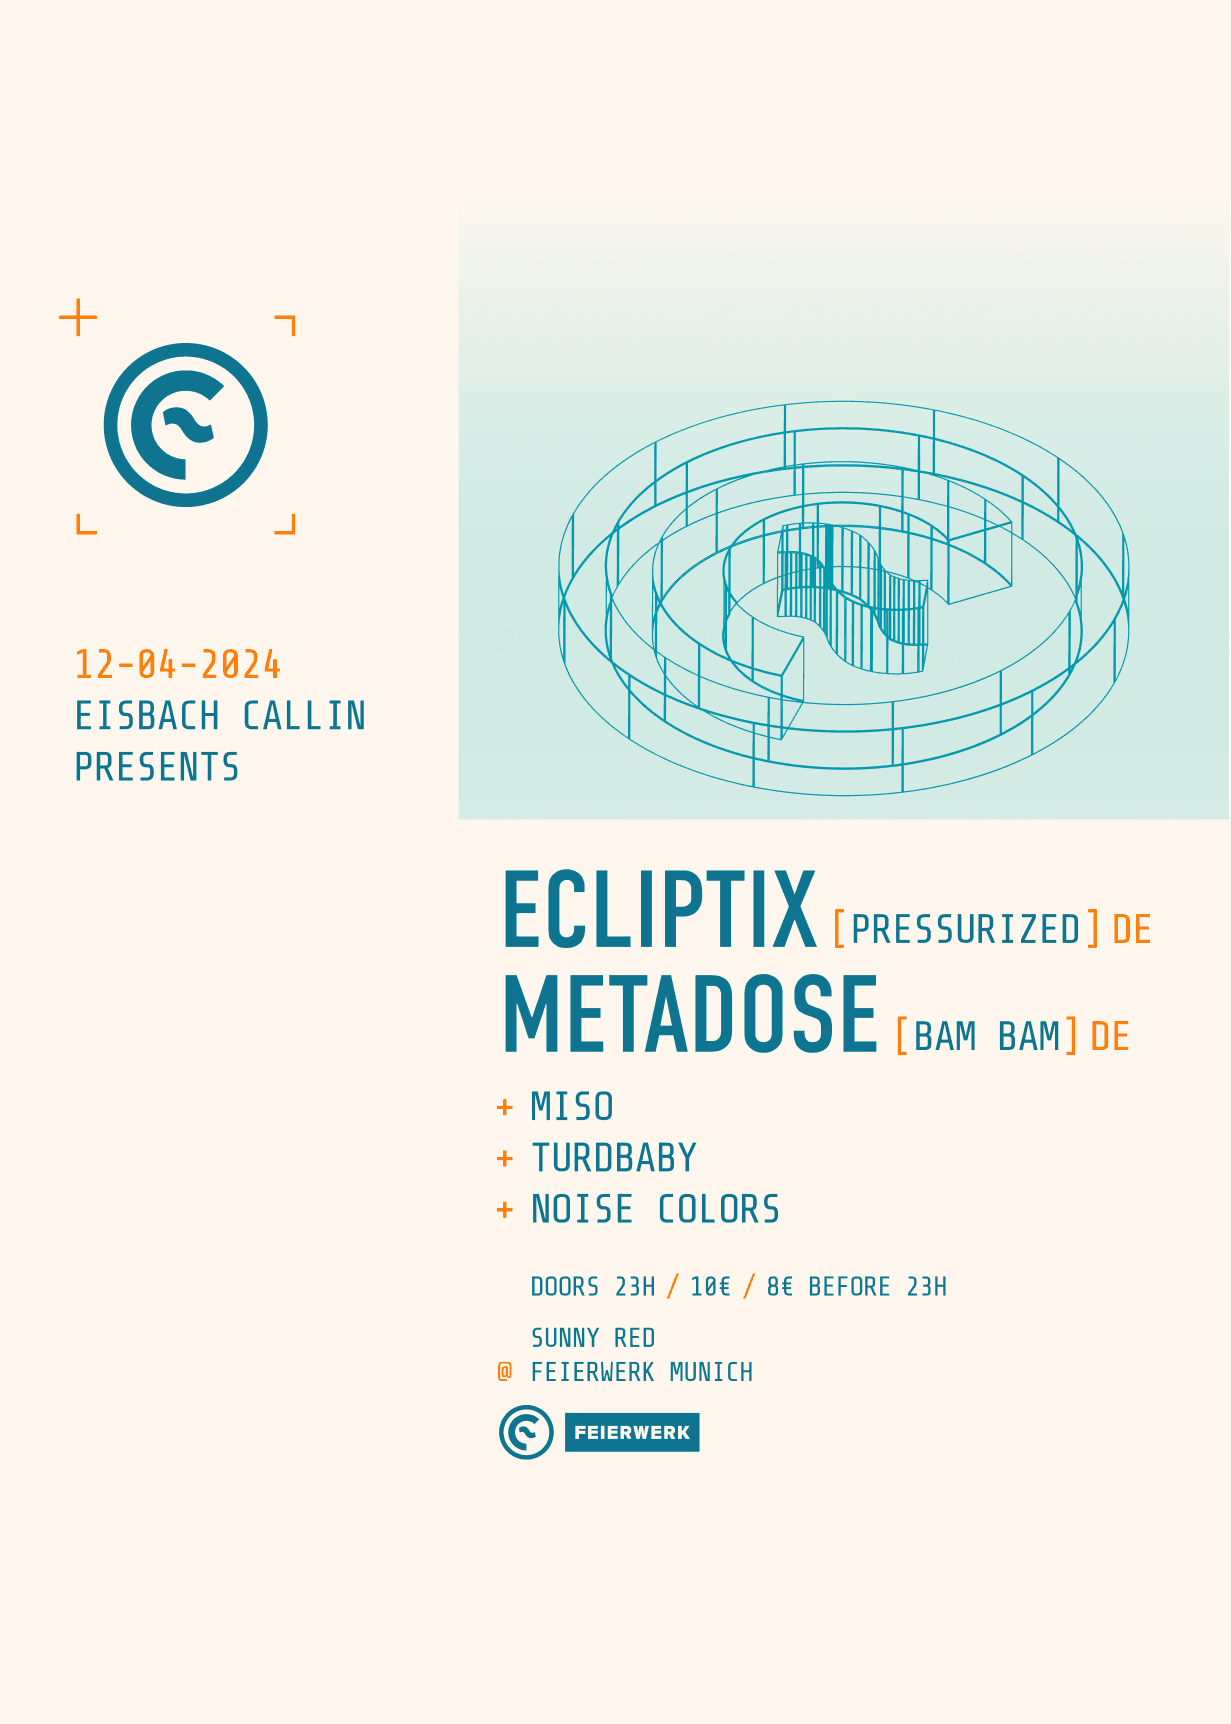 Eisbach Callin presents Ecliptix & Metadose